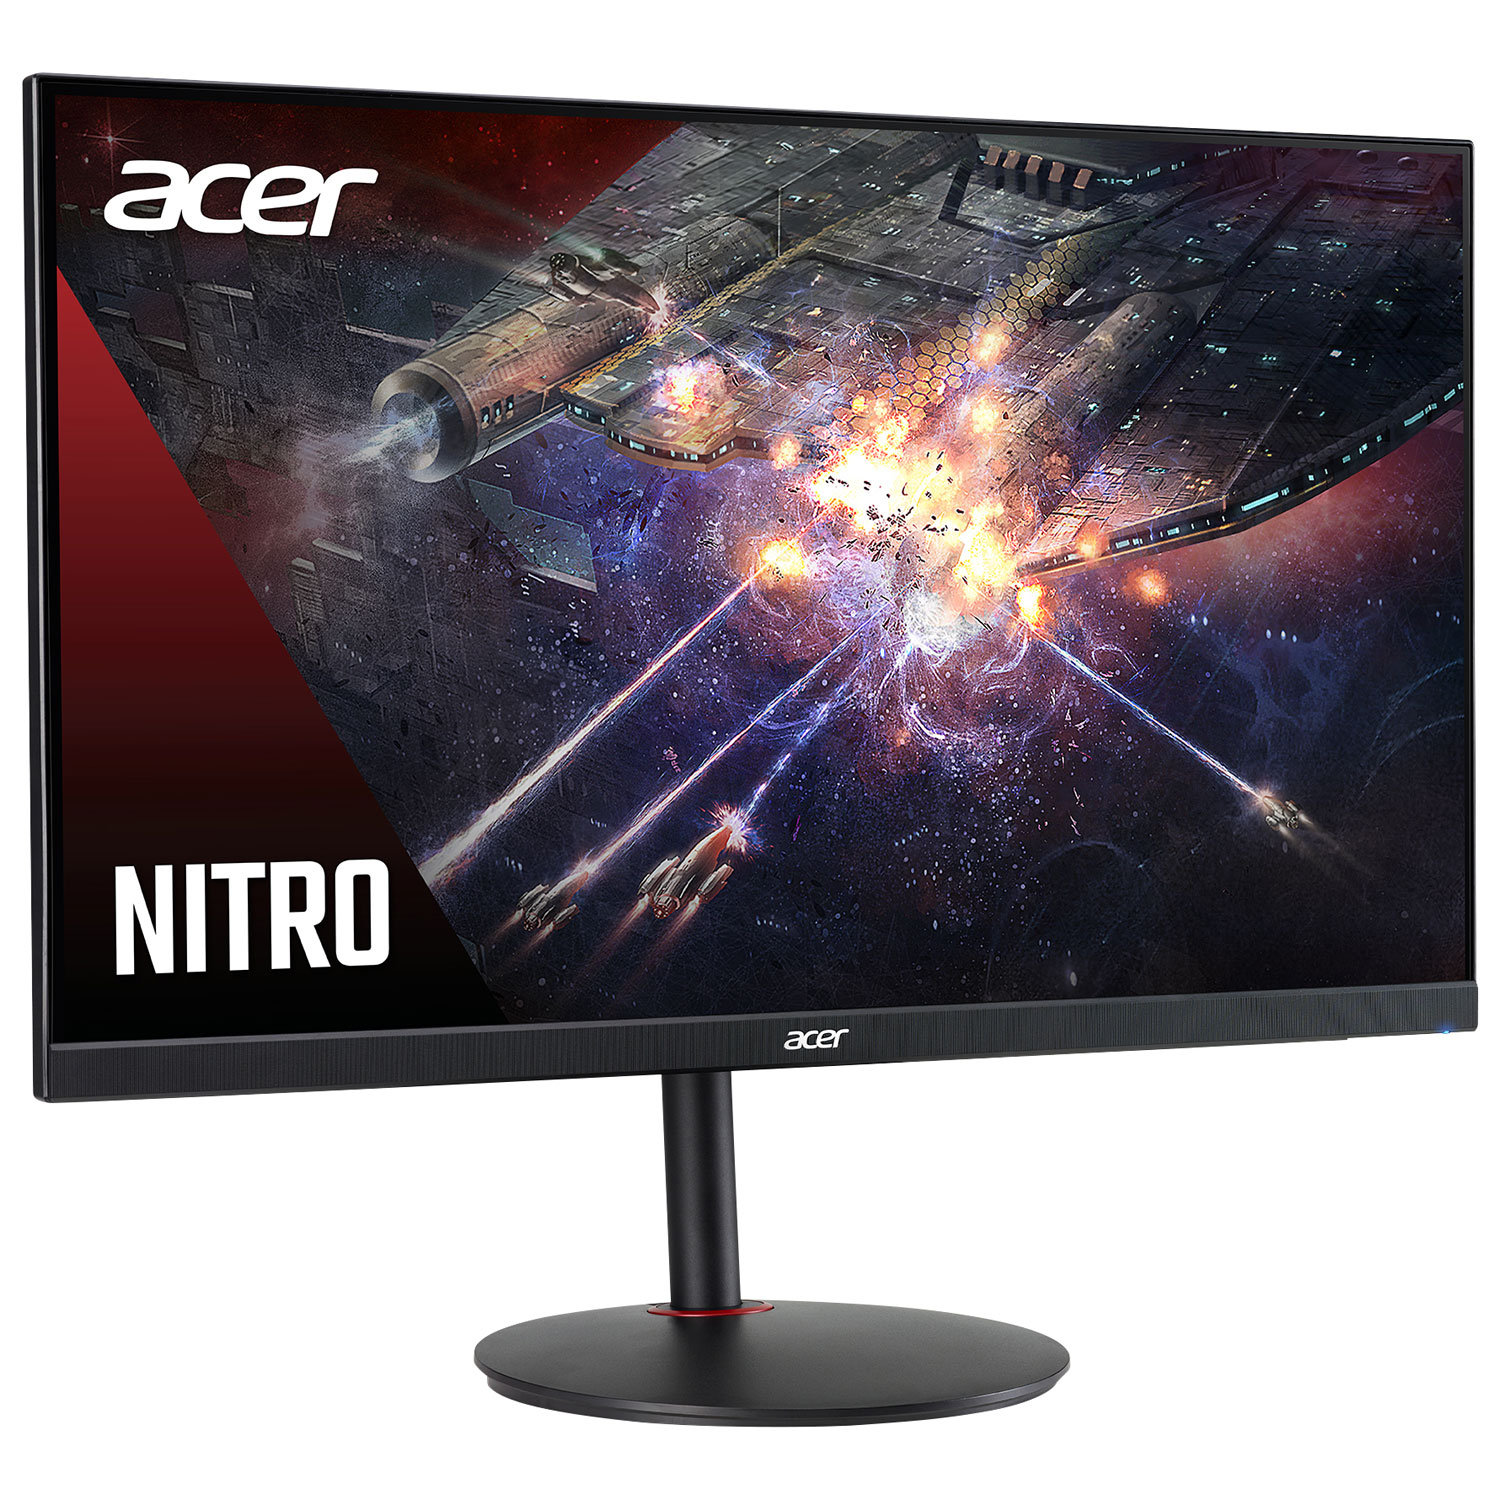 Acer Nitro 23.8" FHD 180Hz 0.5ms GTG IPS LED FreeSync Gaming Monitor (XV240Y M3BMIIPRX) - Black